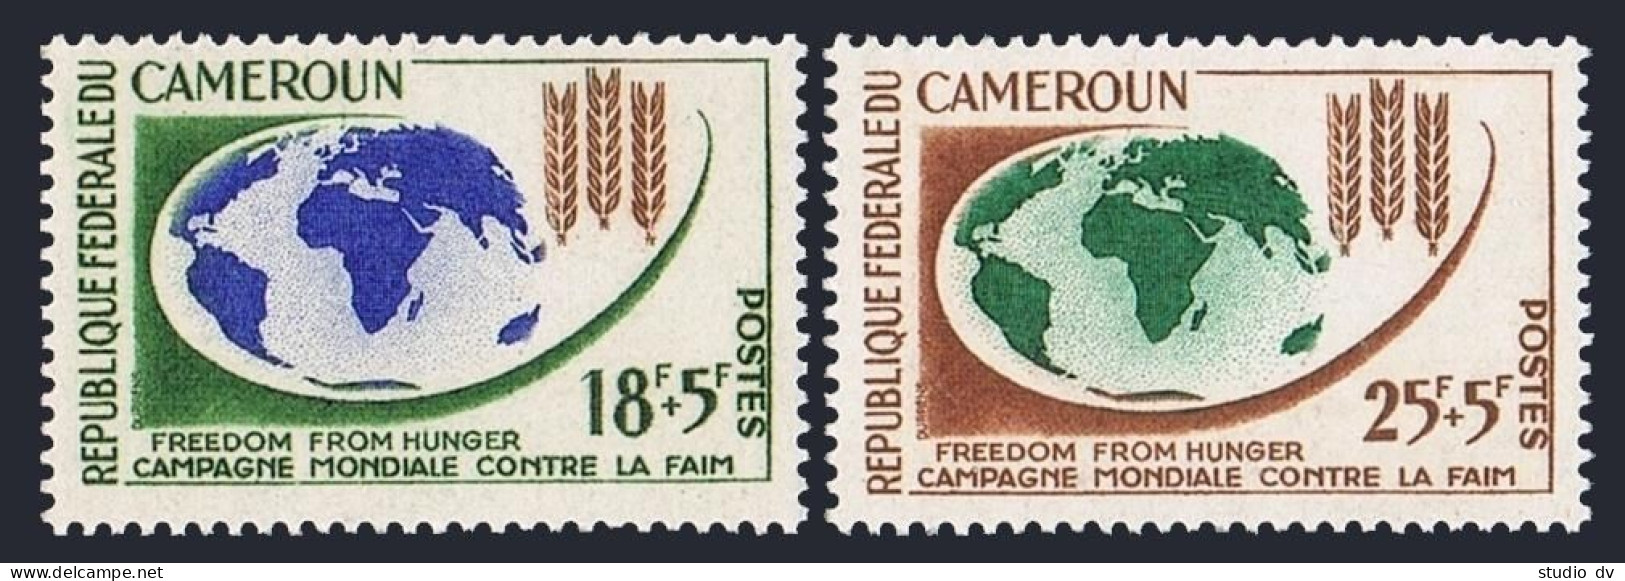 Cameroun B37-B38, MNH. Michel 386-387. FAO. Freedom From Hunger, 1963. Map. - Kamerun (1960-...)